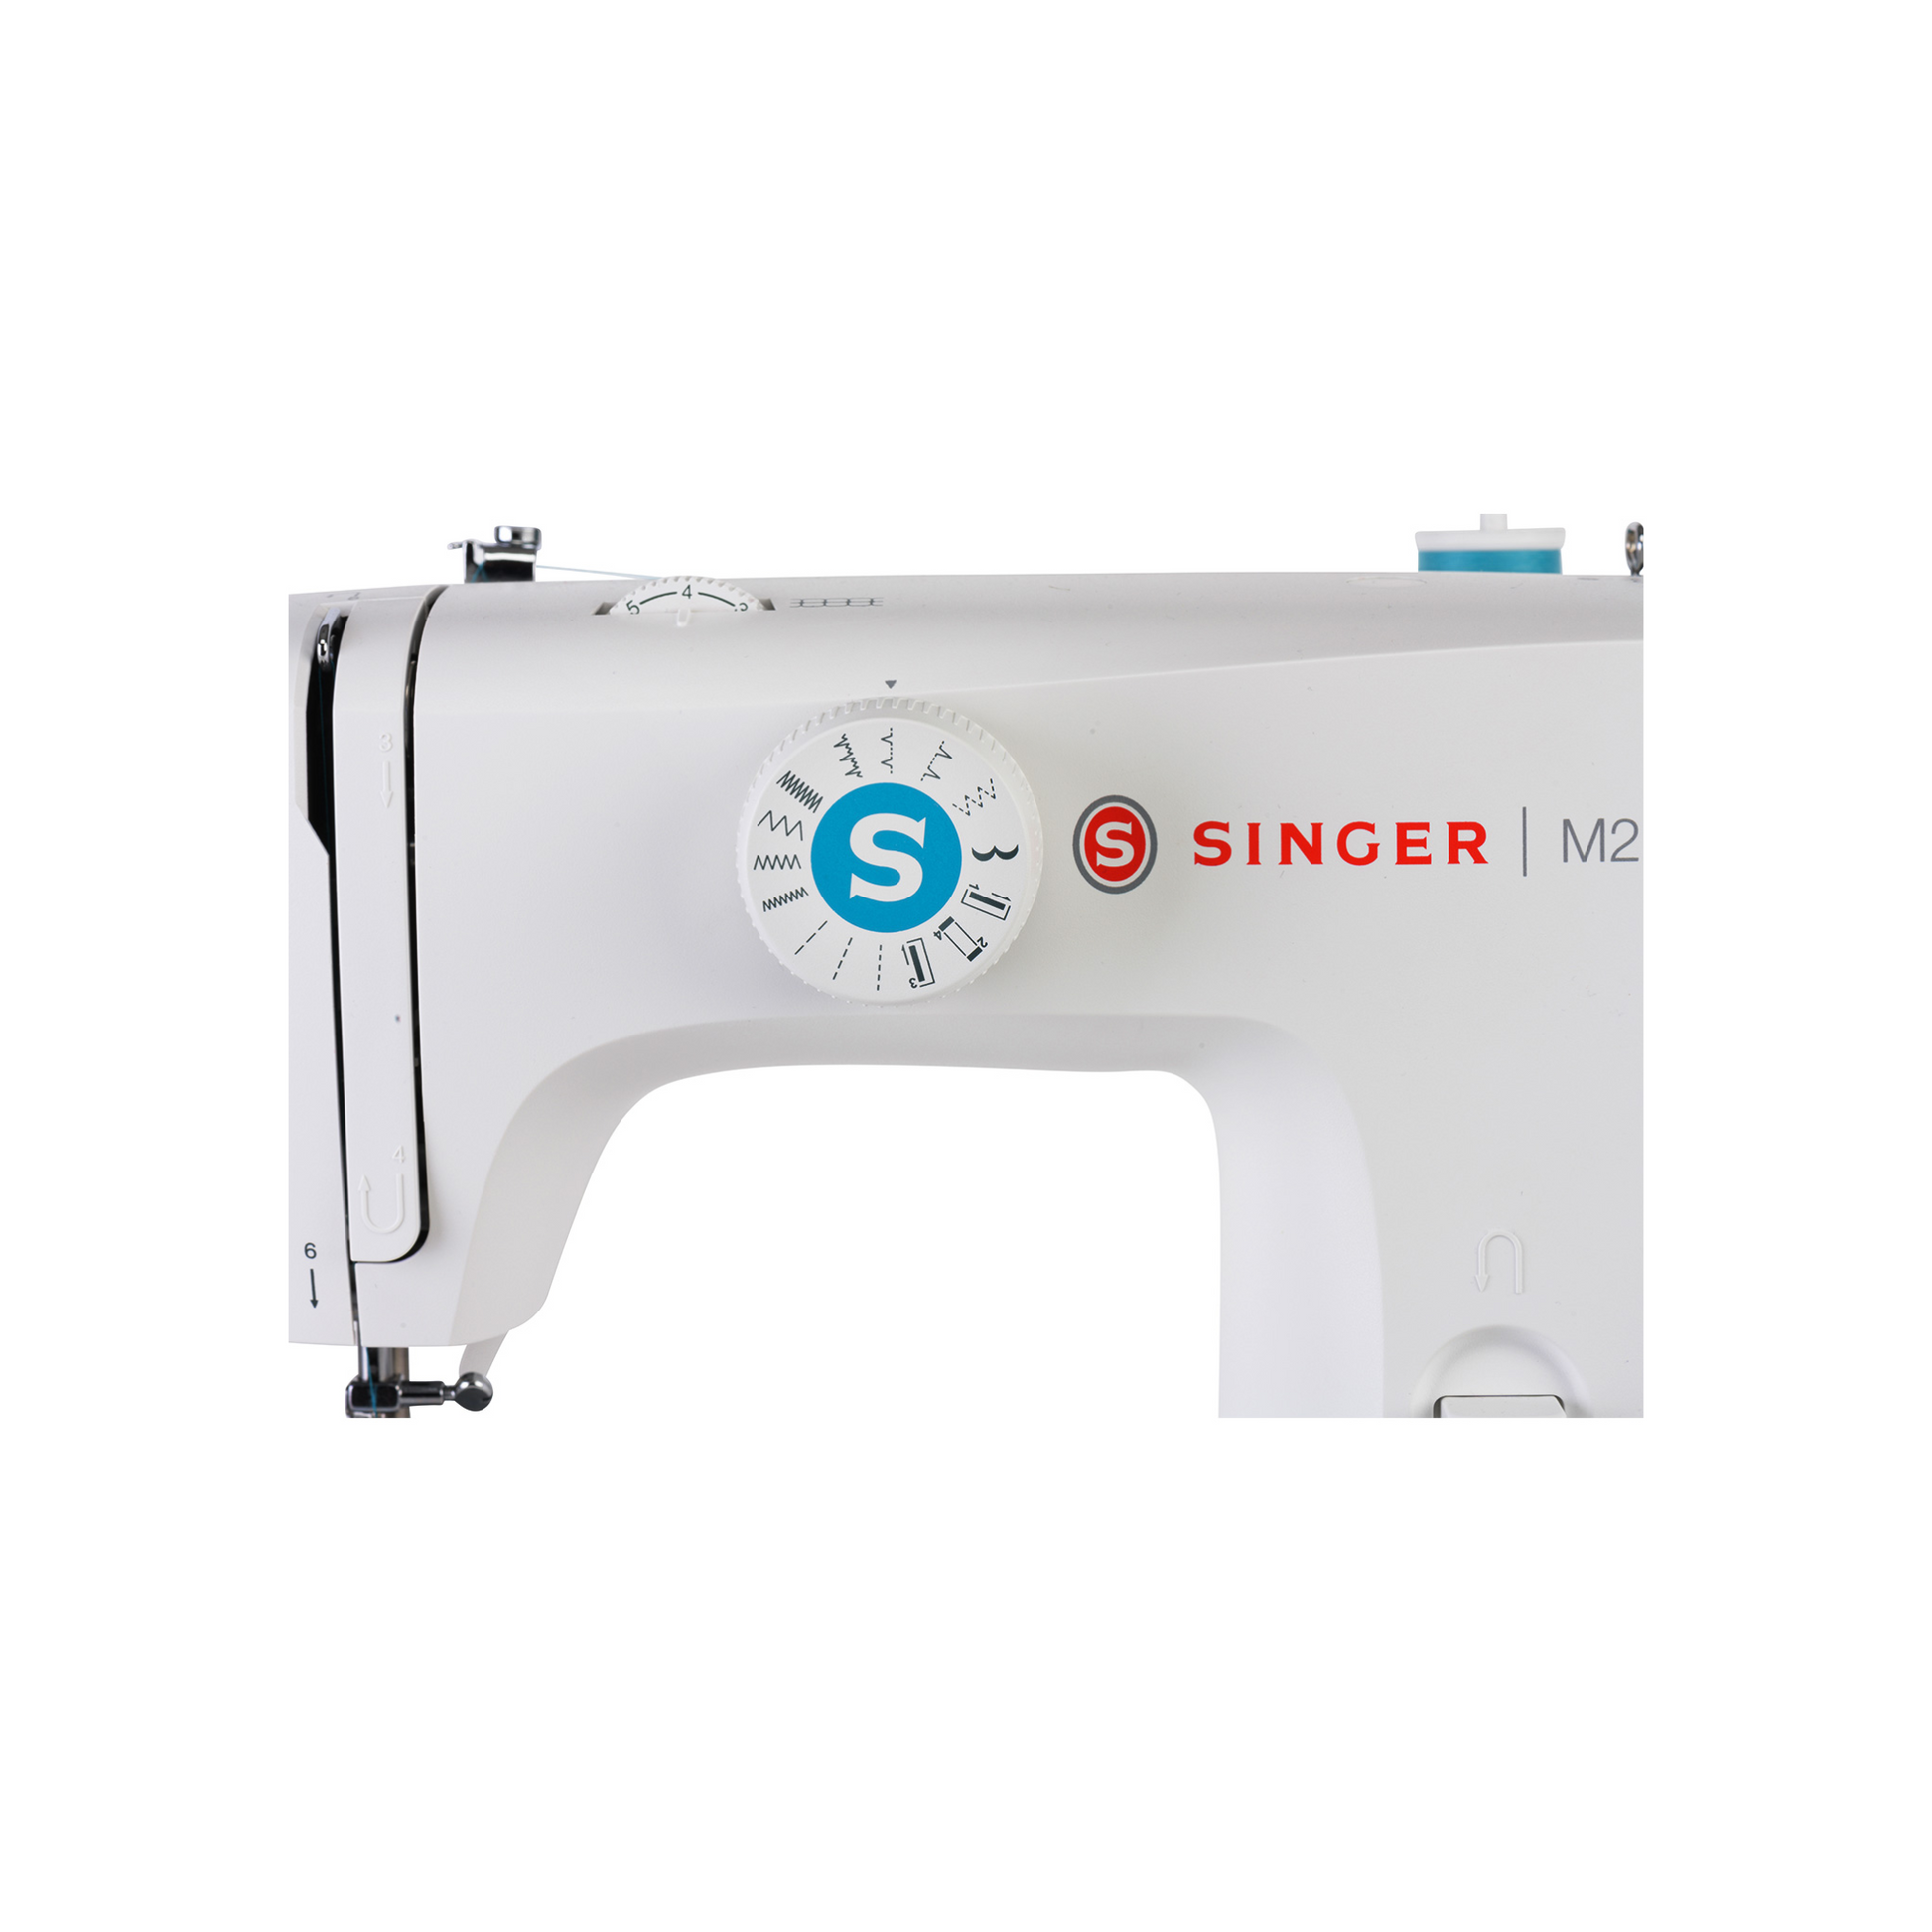 Singer M2105 - Sewing machine - White - Close view